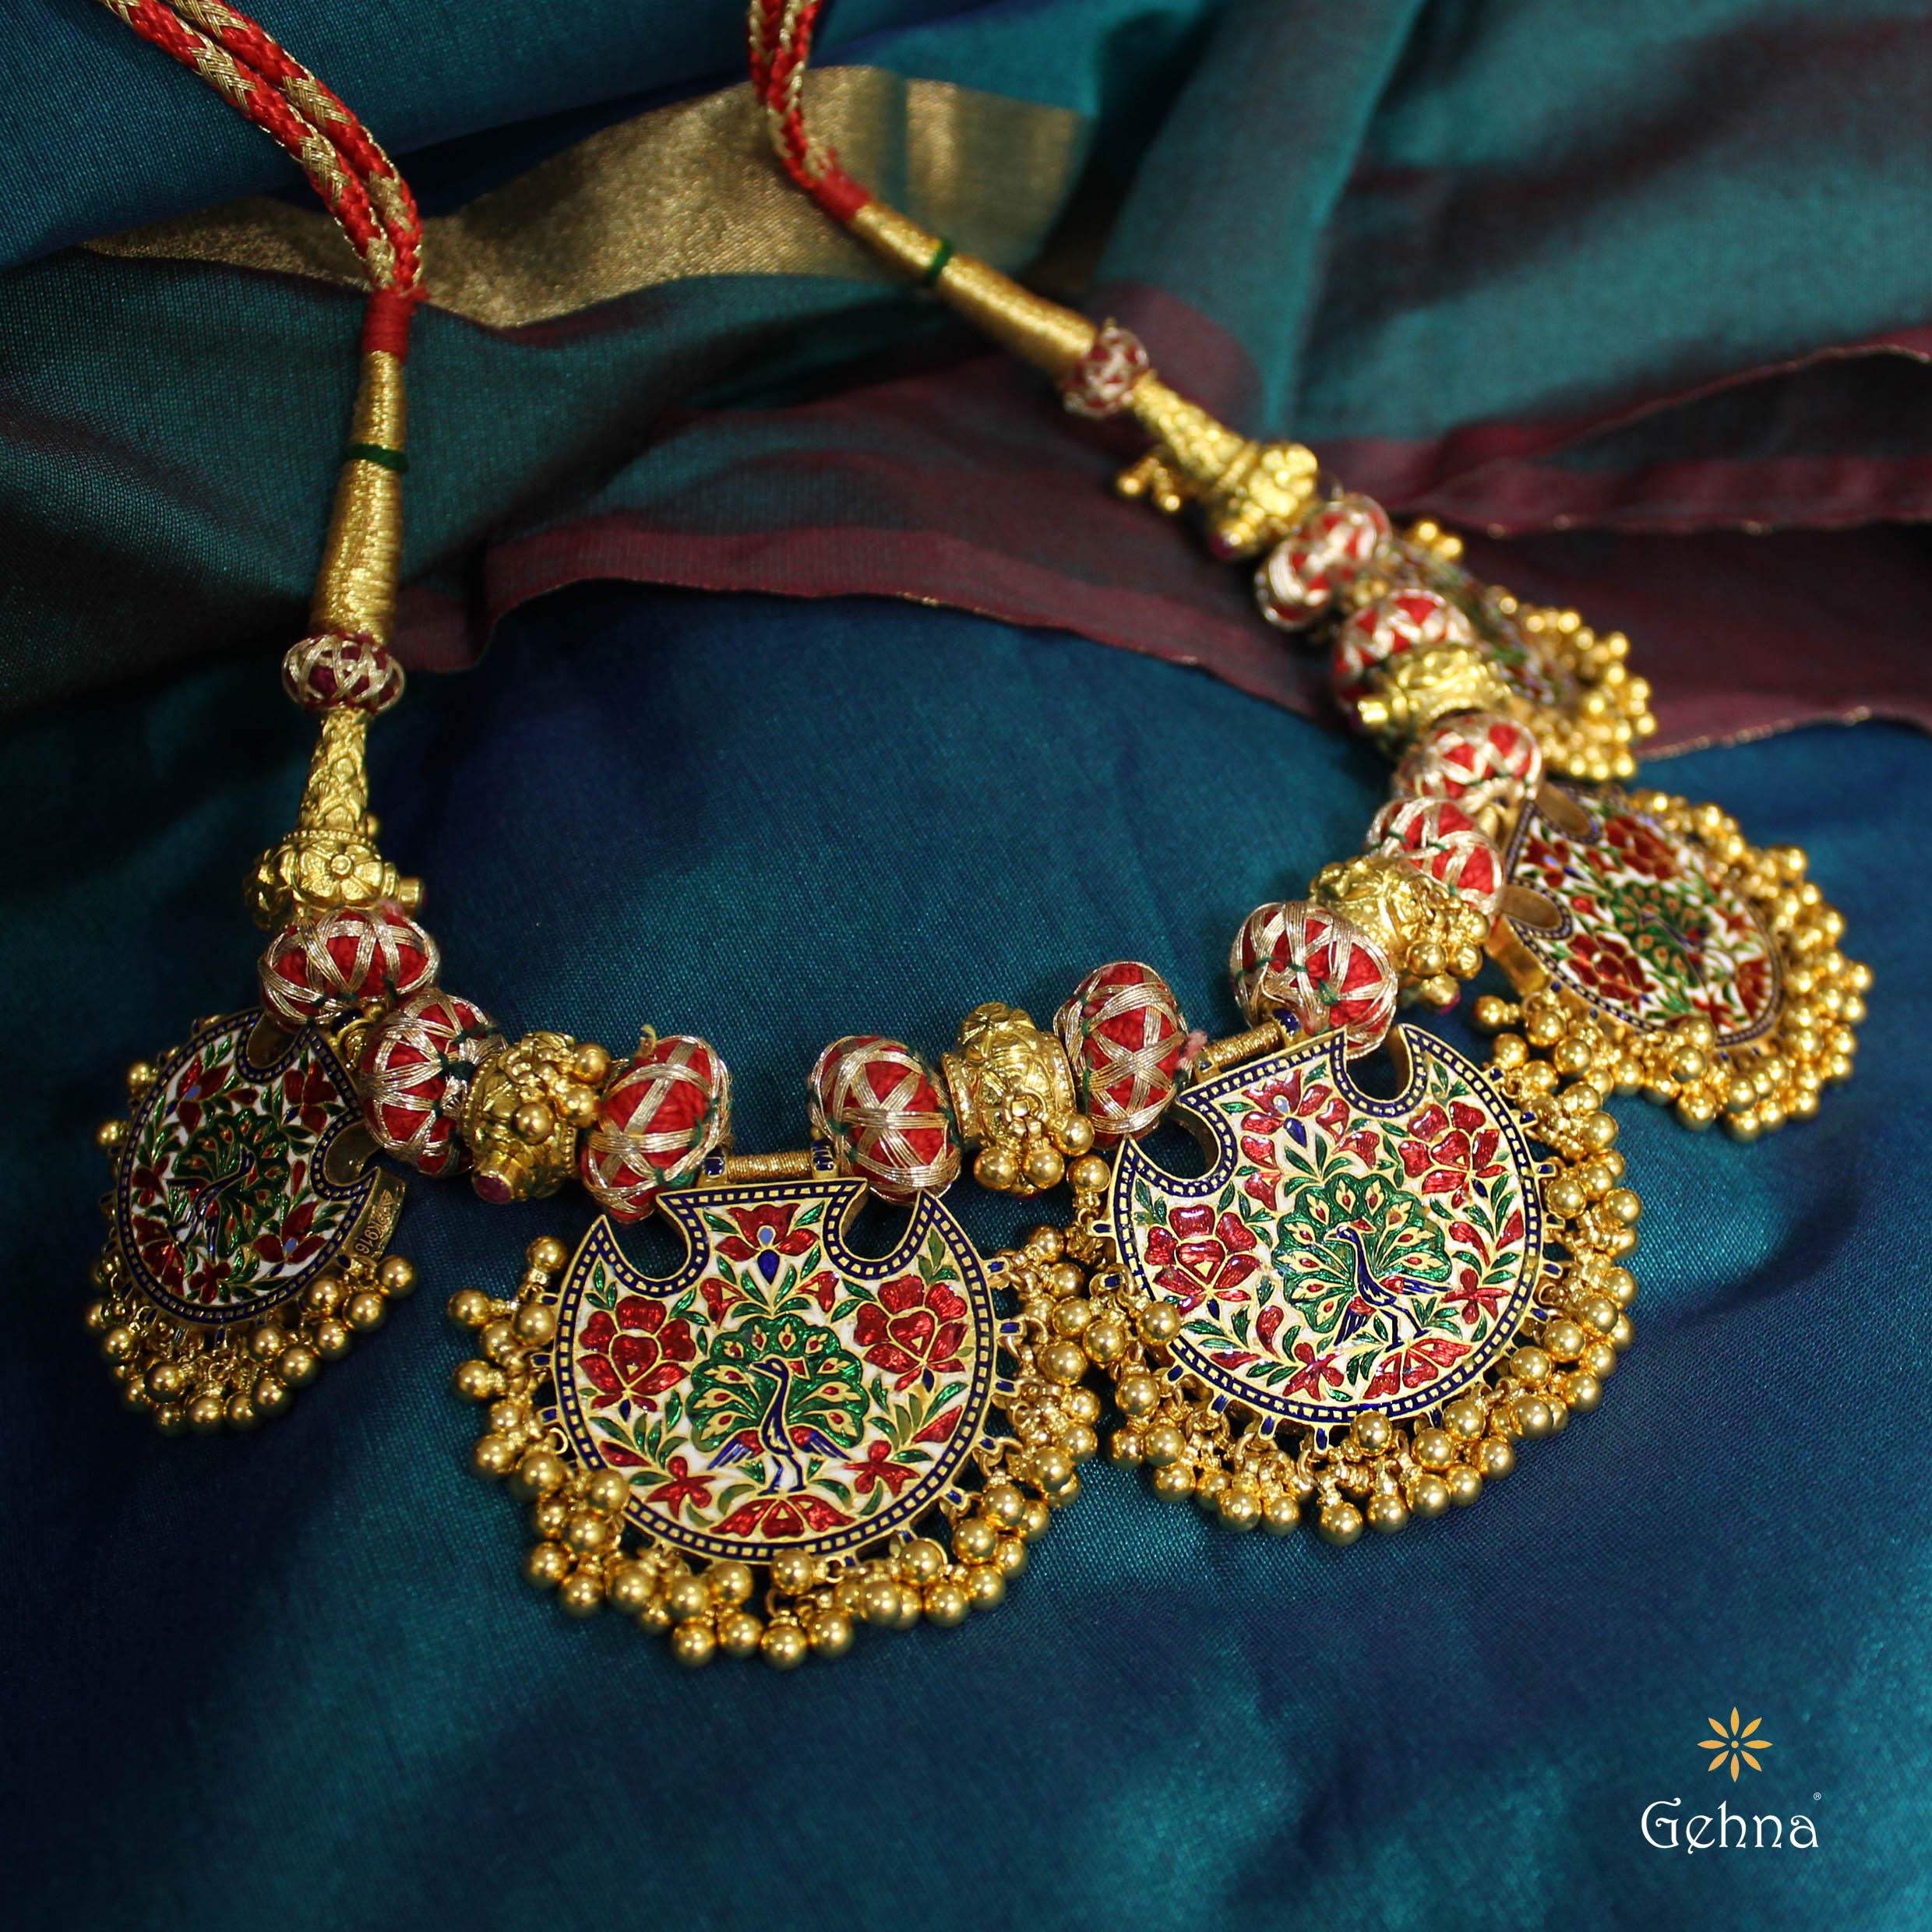 Gorgeous Gold Pankhi Necklace Set From Gehna India